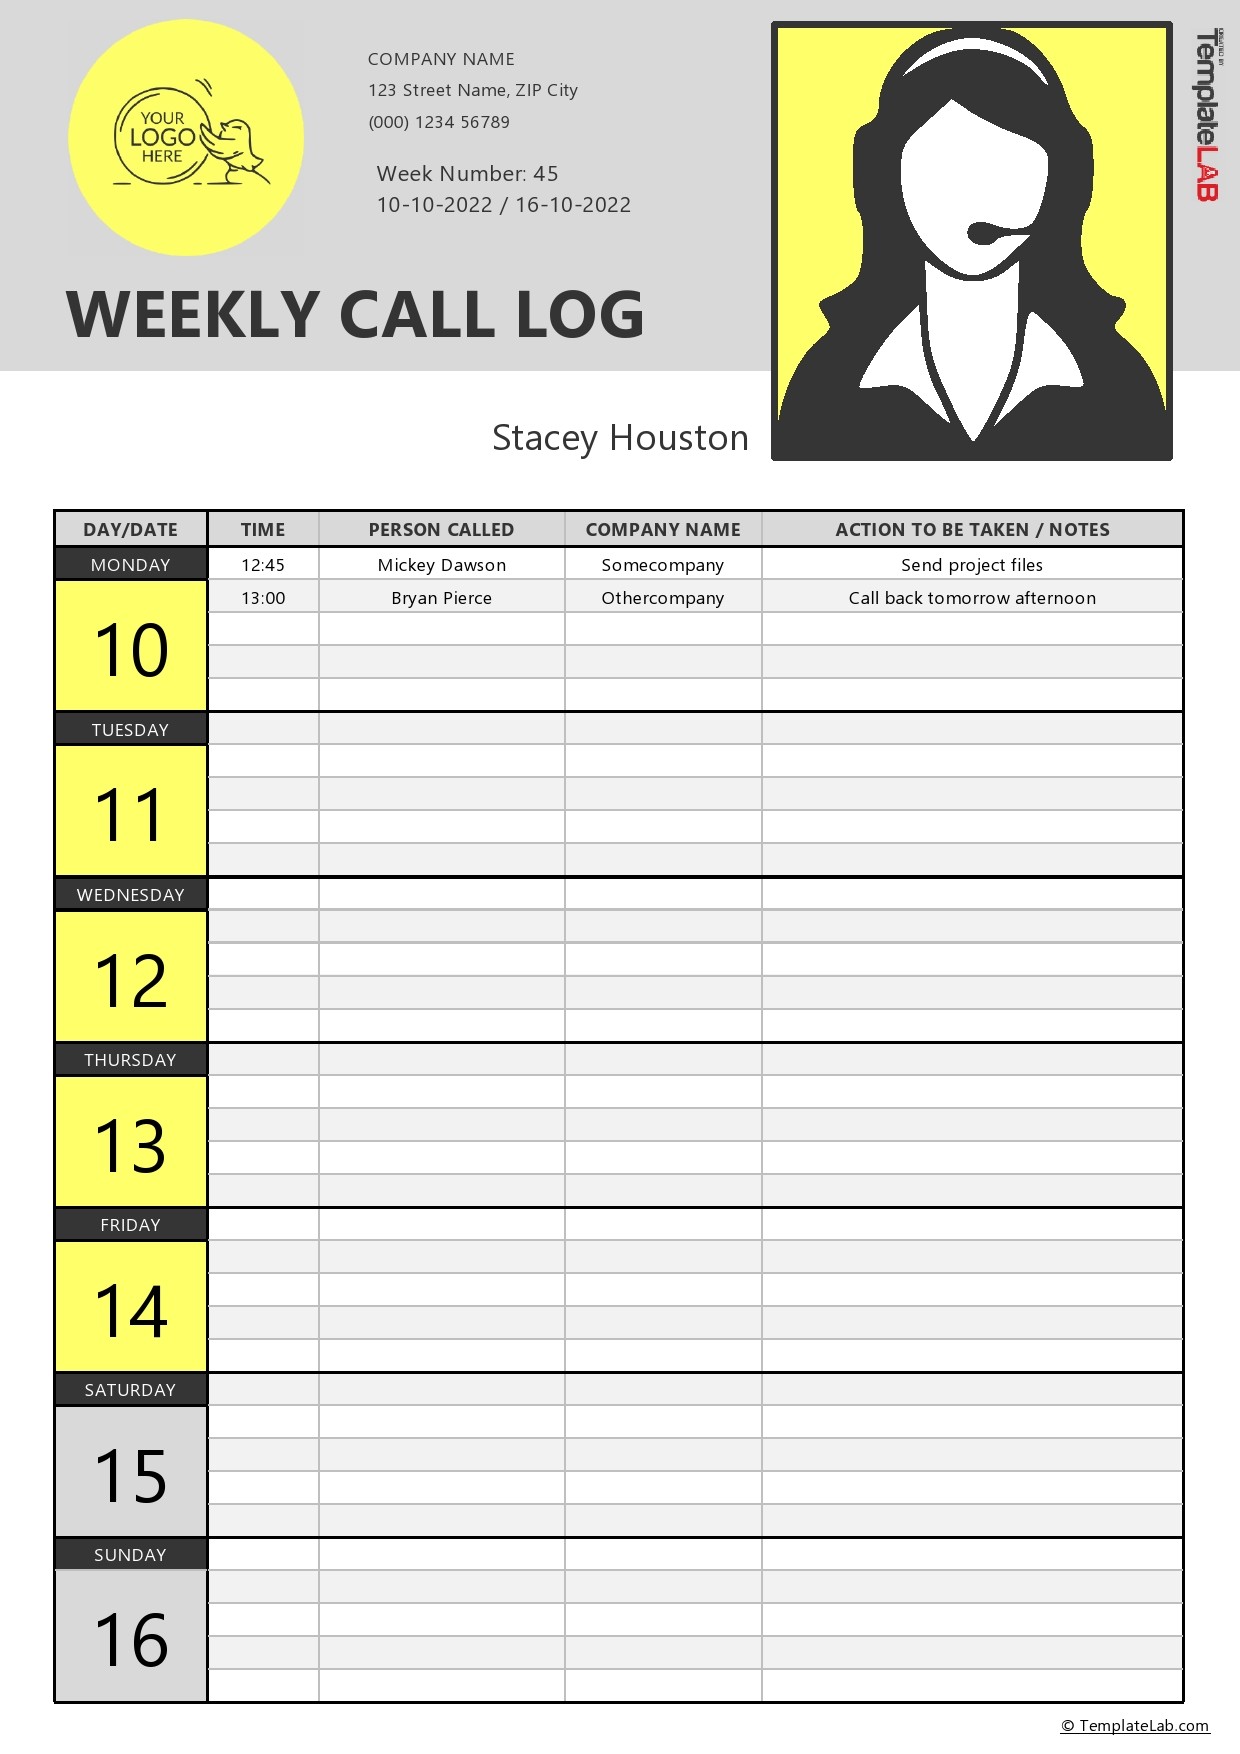 Free Weekly Call Log Template